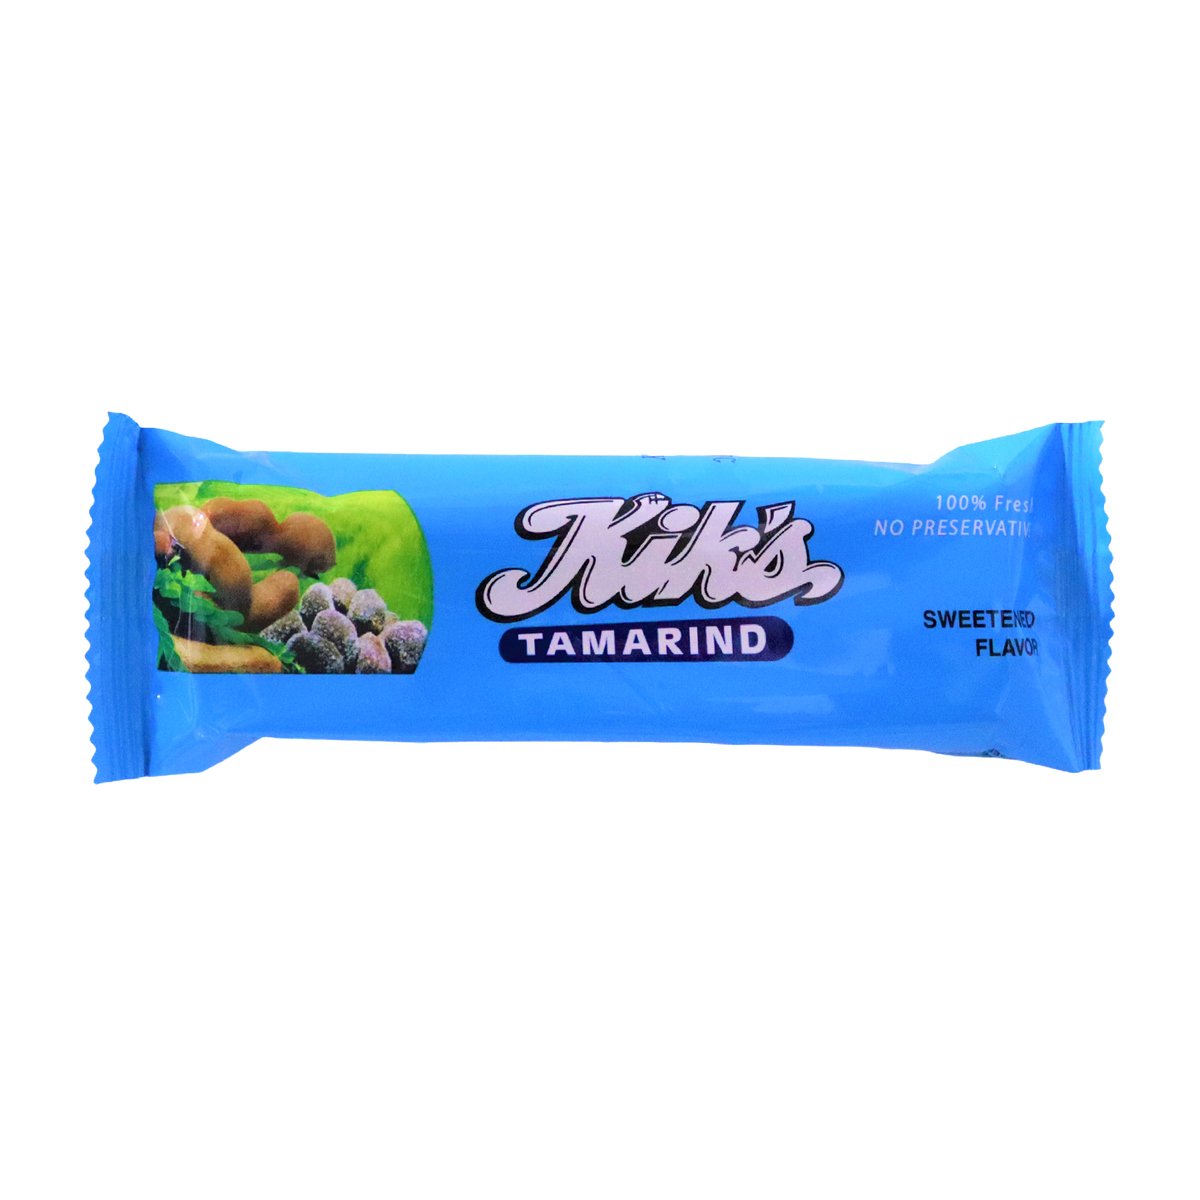 Kik's Sweetened Tamarind 35 g